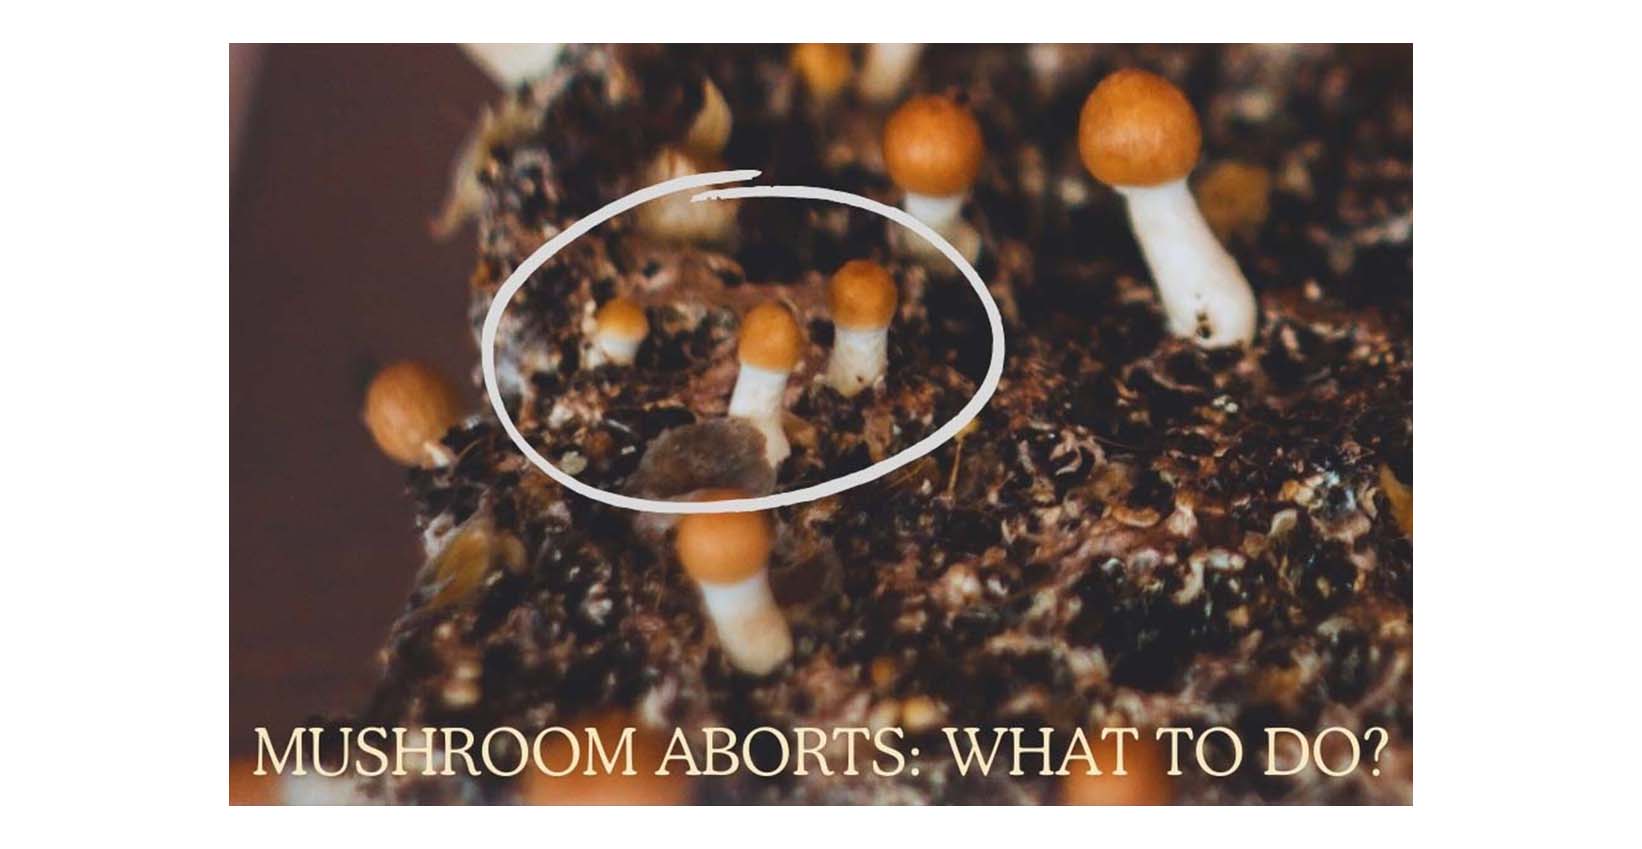 Magic mushroom aborts in a grow kit